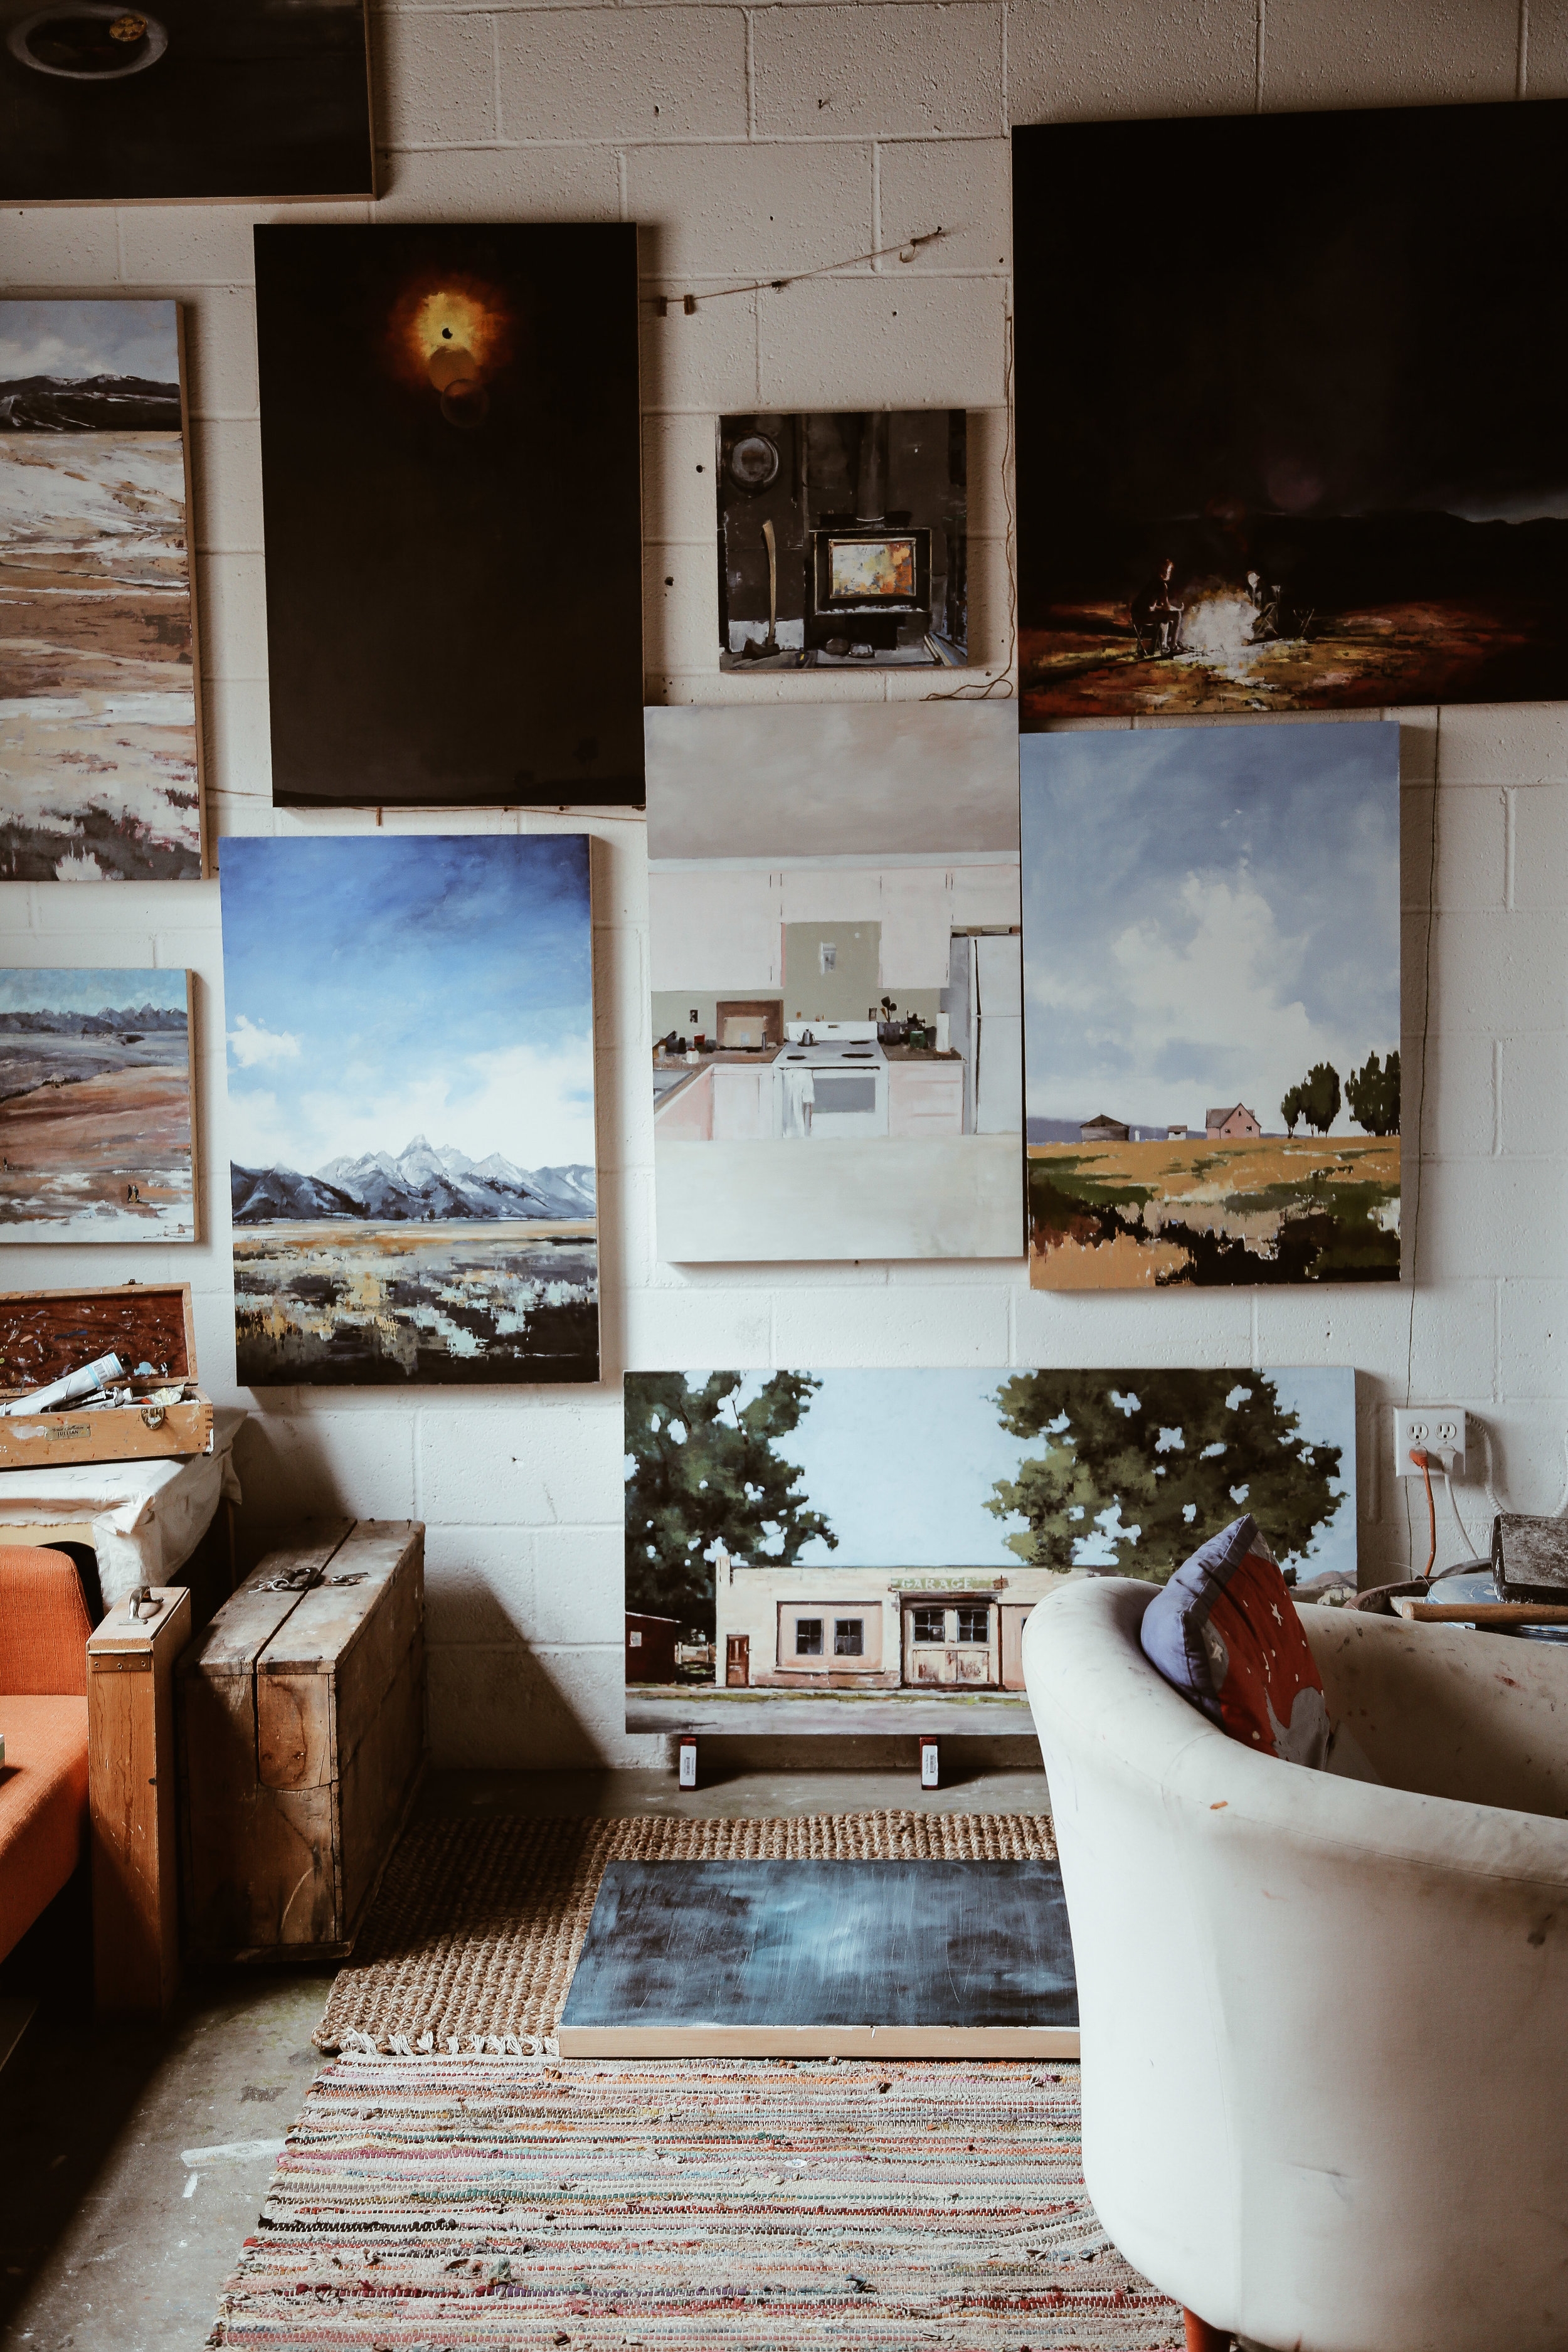 Katy Ann Fox's studio space at Teton Art Lab